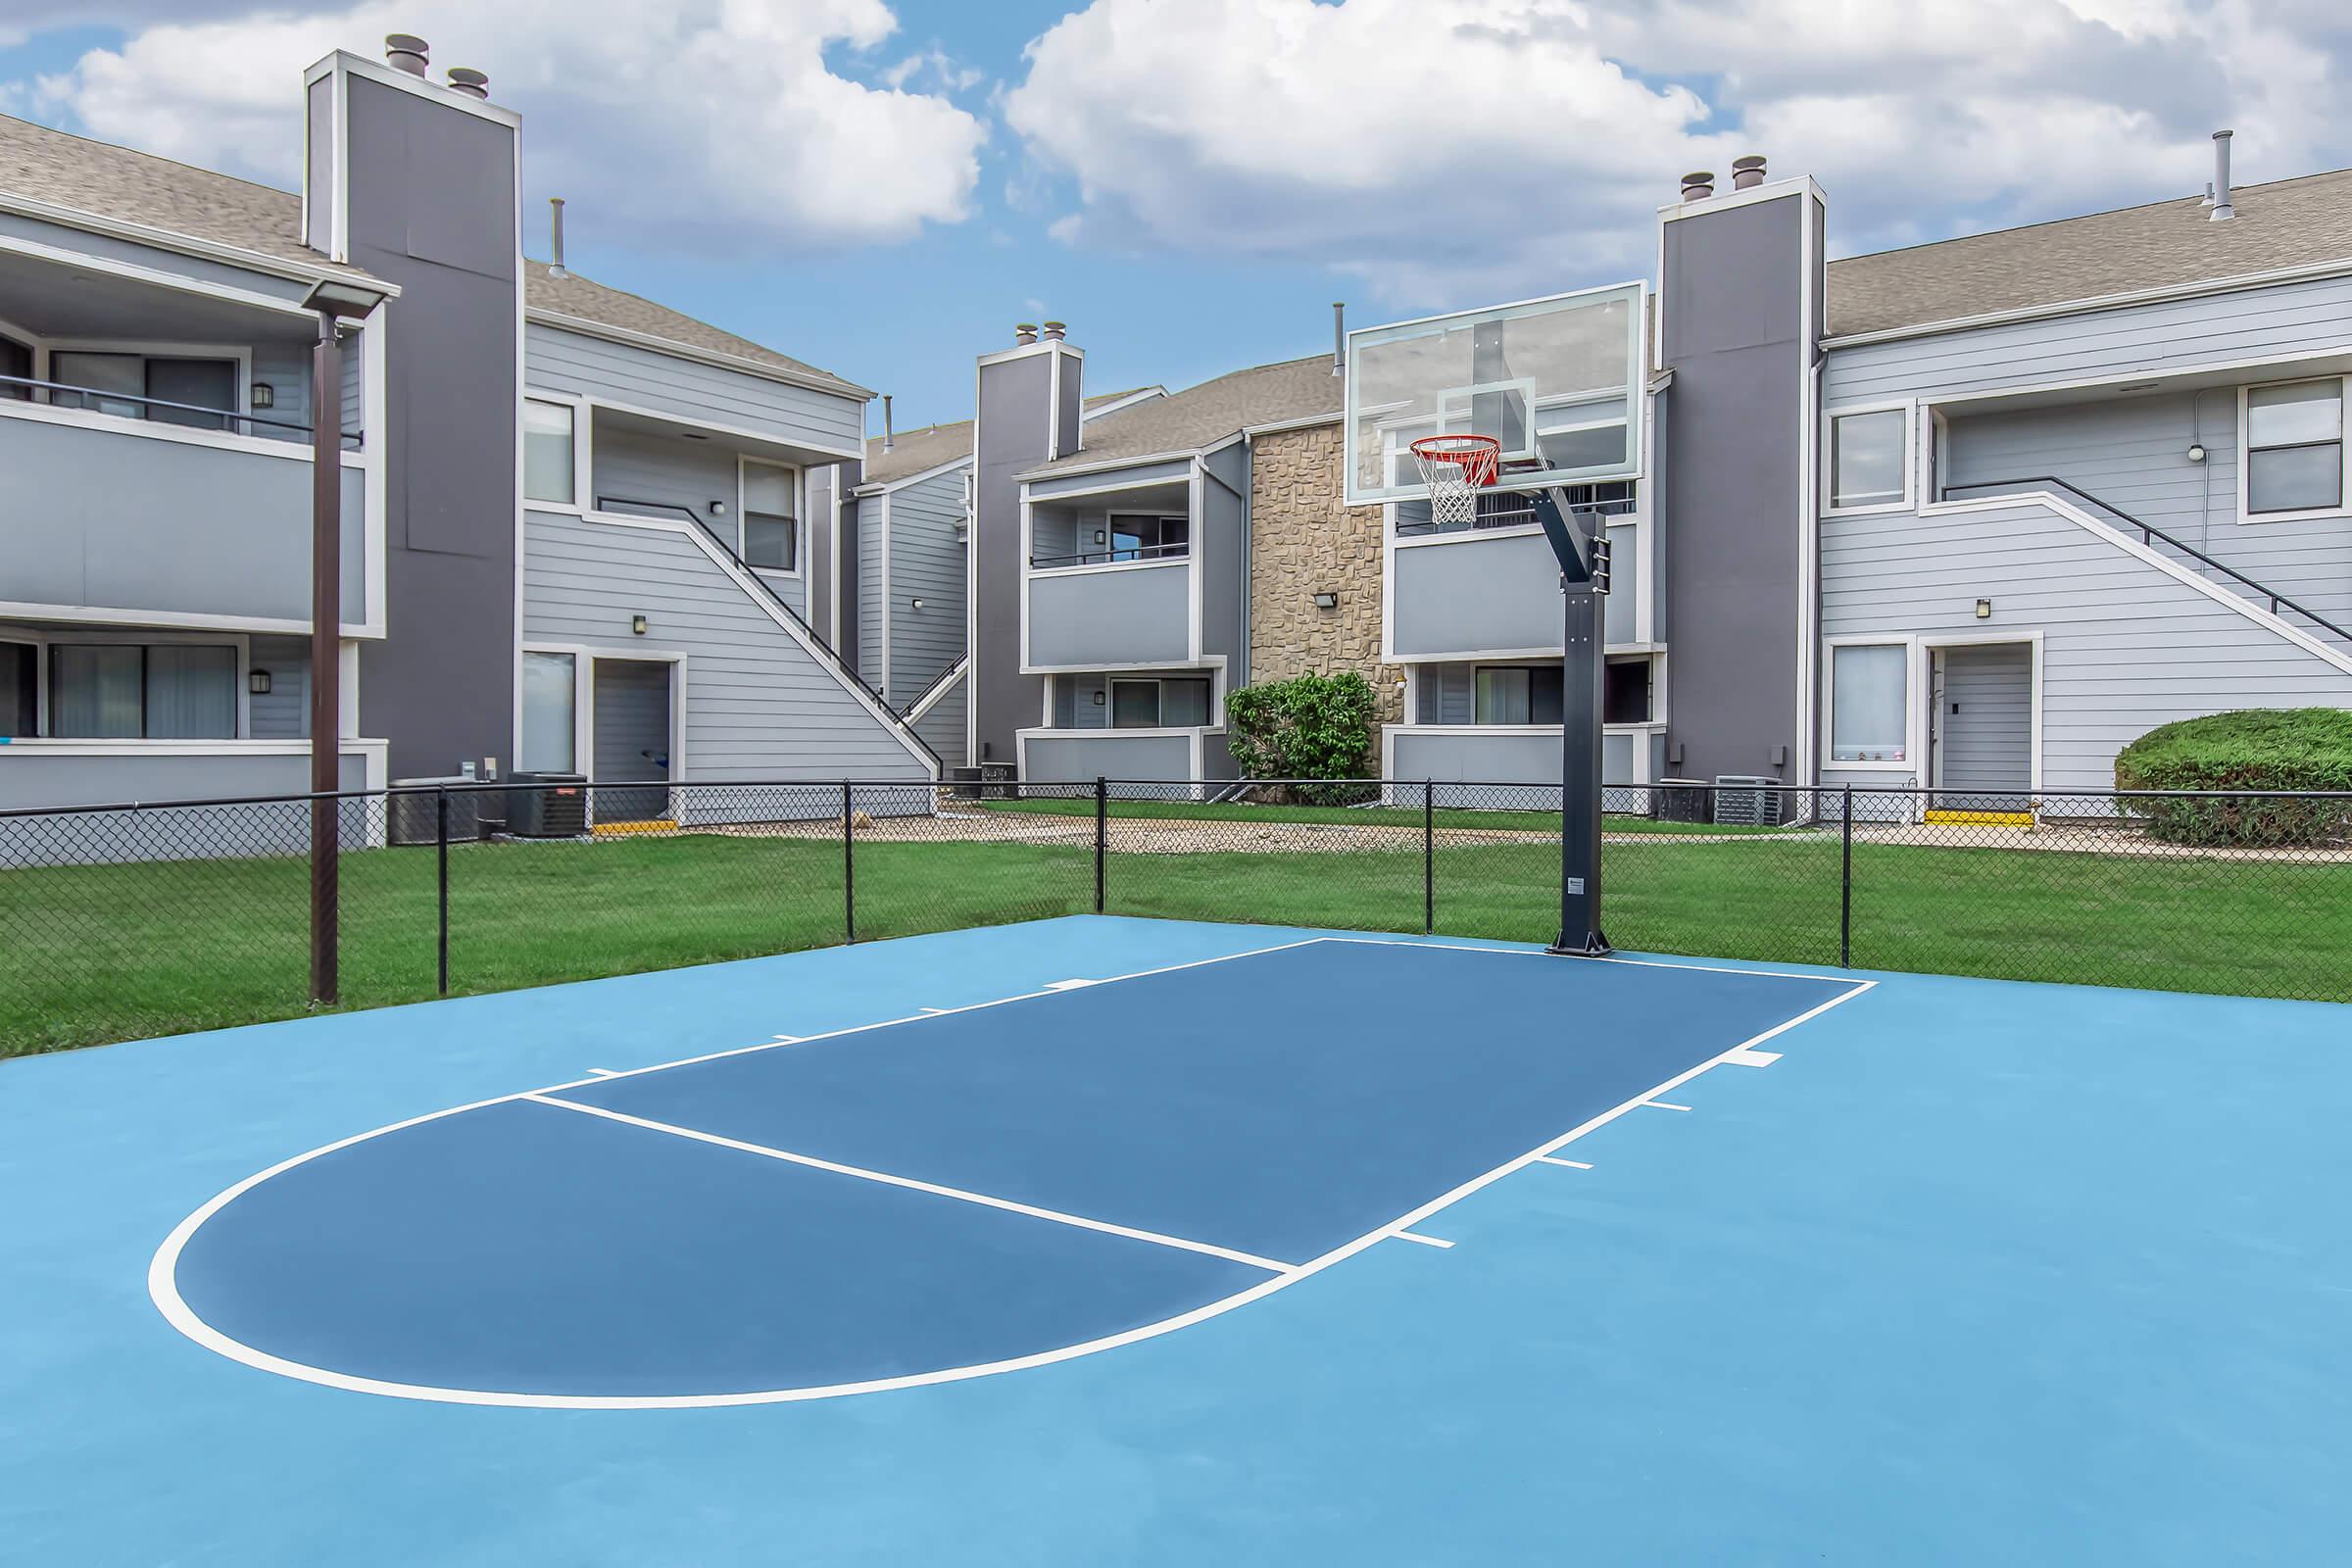 a house on a basketball court